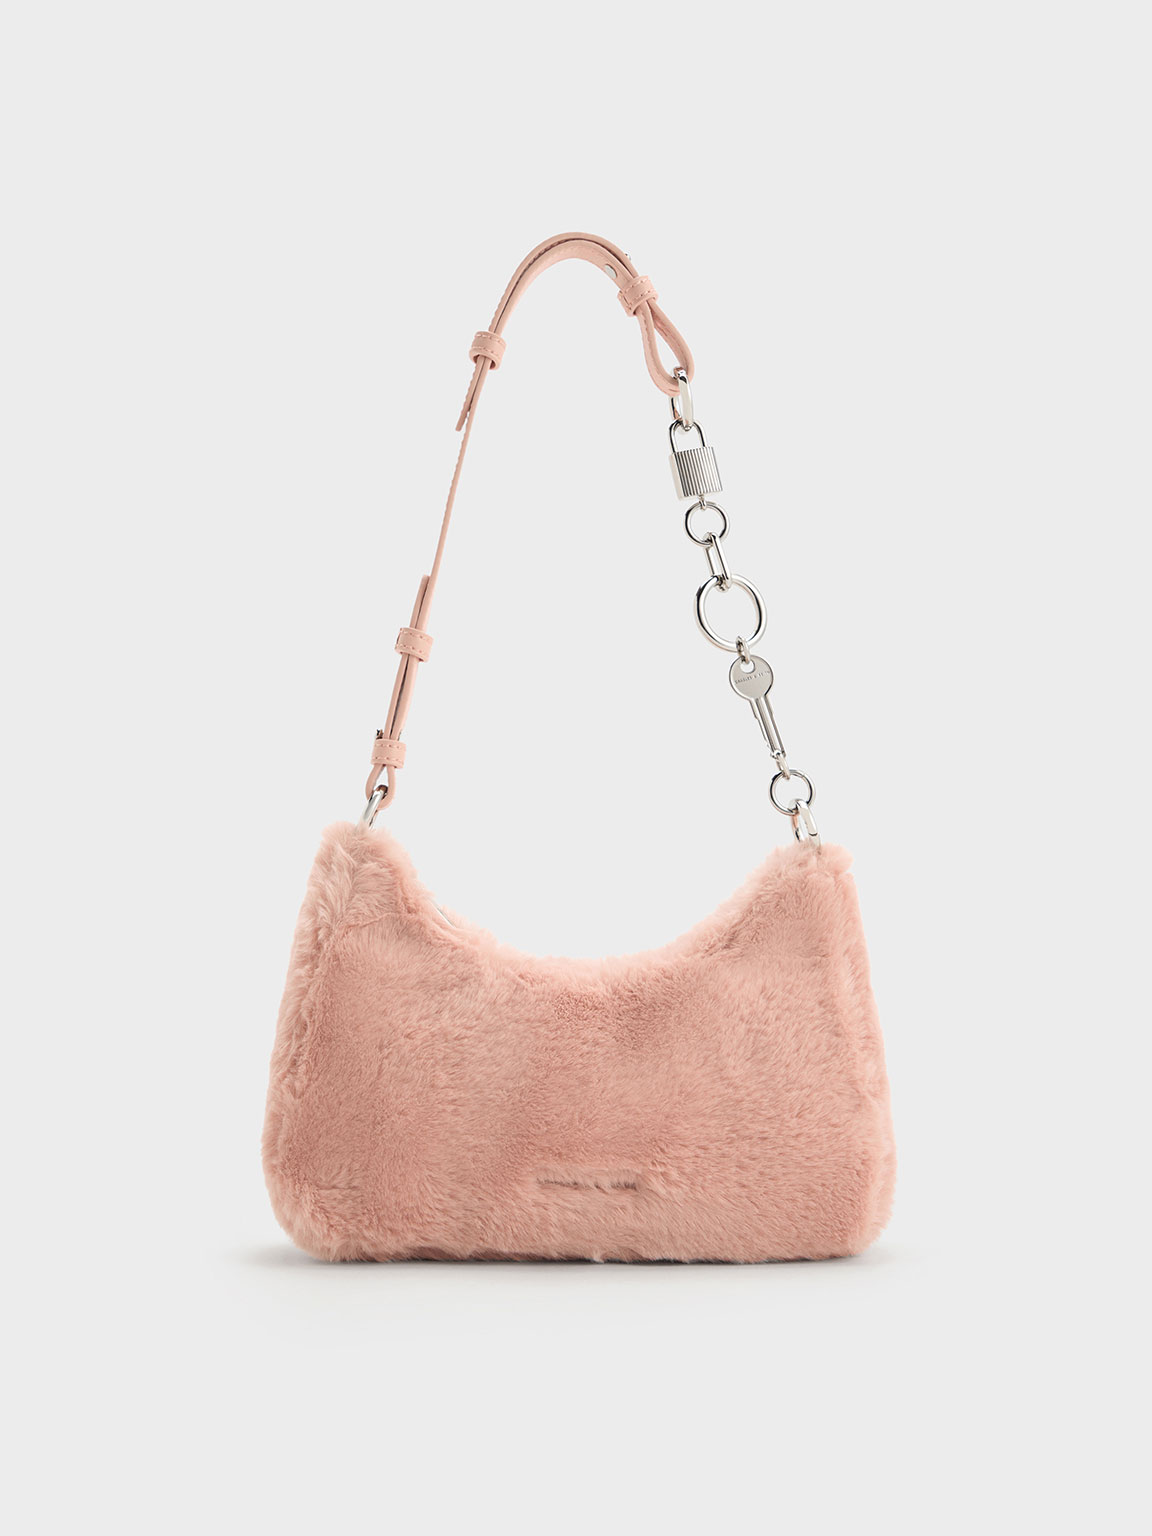 GB Girls Quilted Chain Crossbody Handbag - Pink